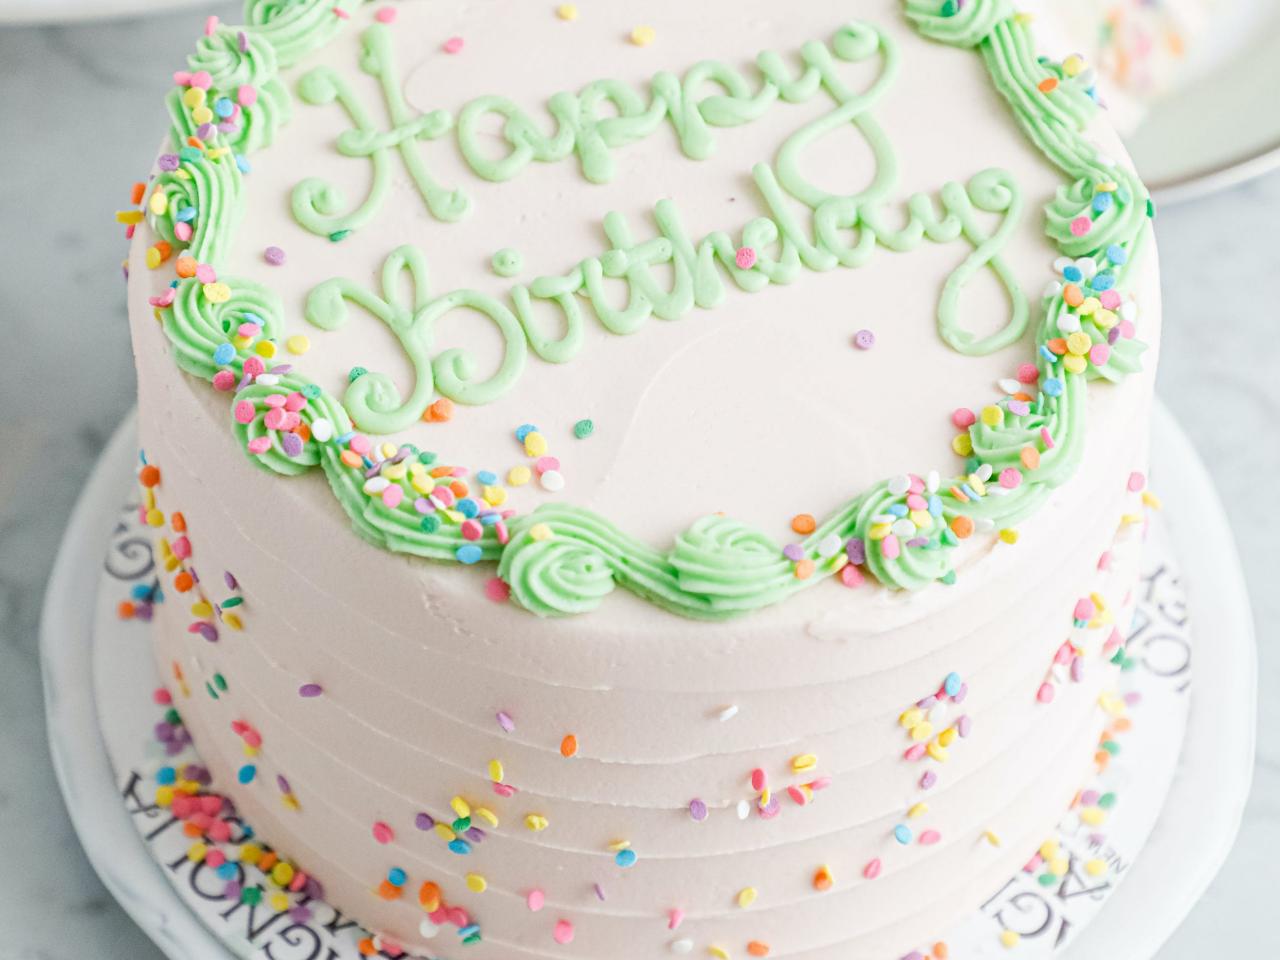 Best Chocolate Birthday Cake Recipe | Easy Birthday Cake Recipe | Baking  Week Recipe #1 - YouTube